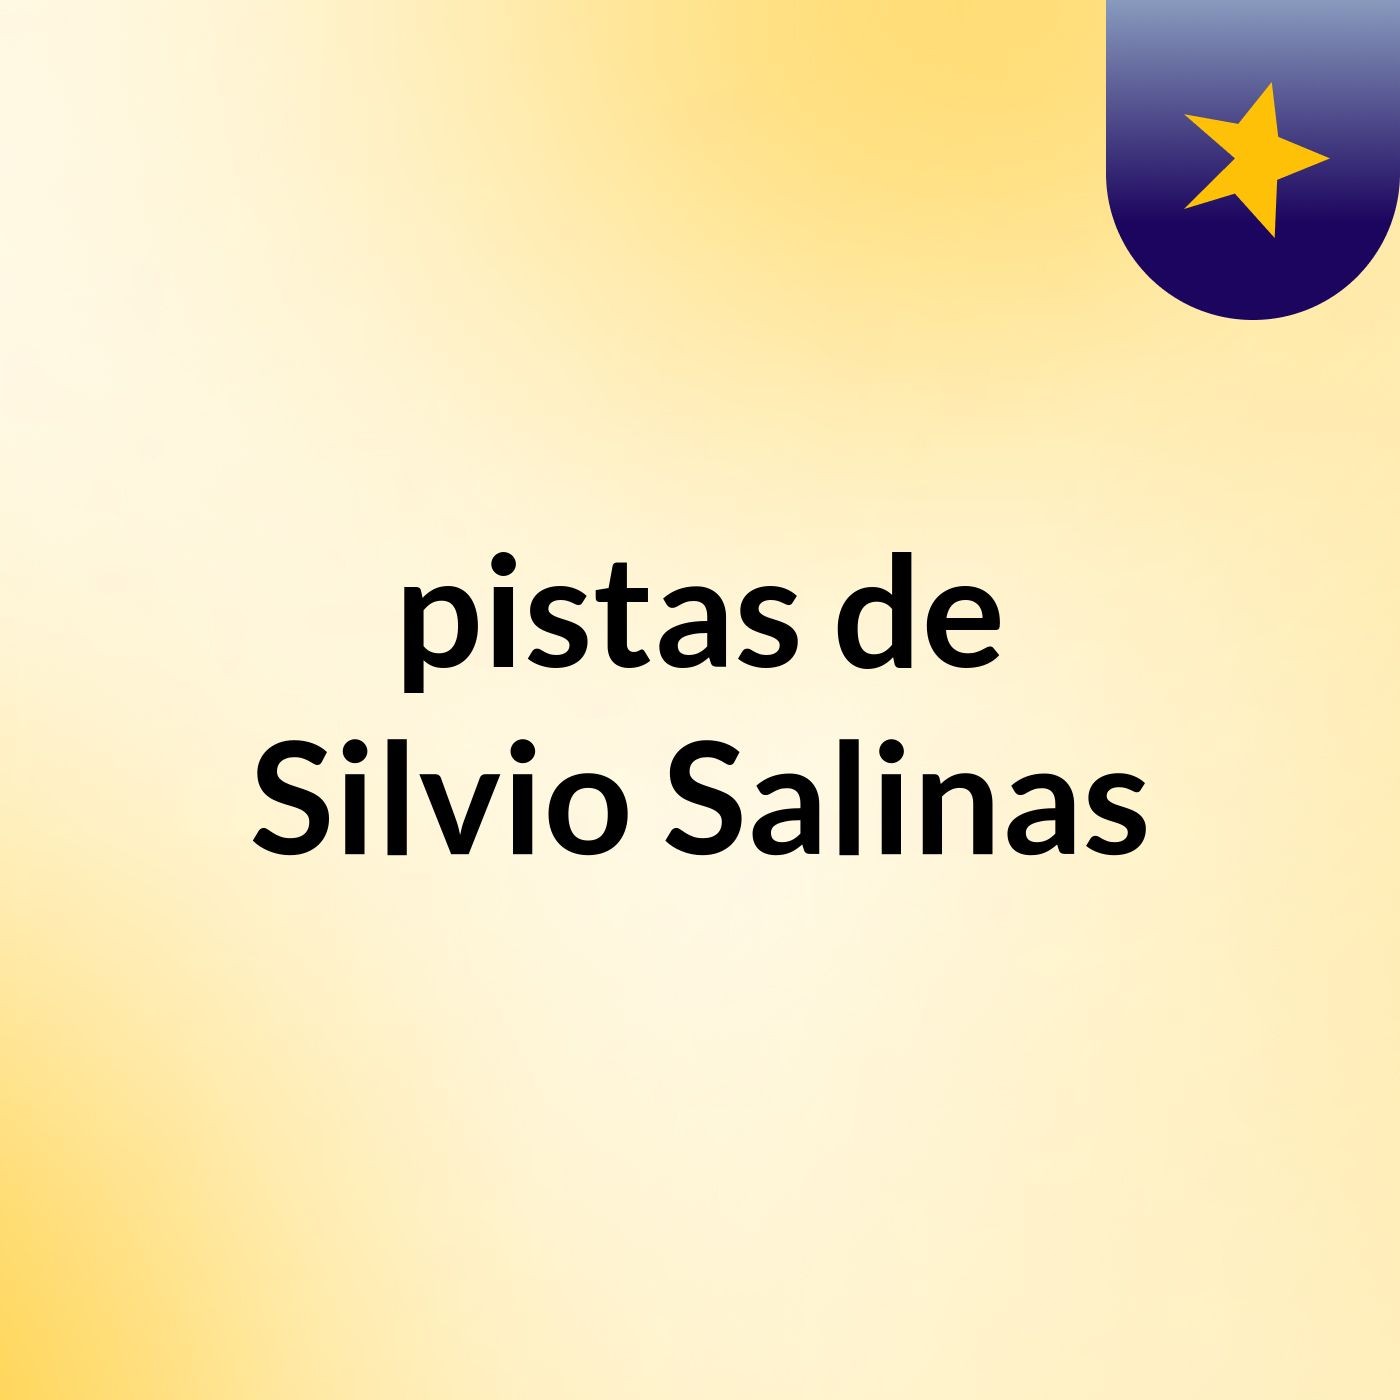 pistas de Silvio Salinas